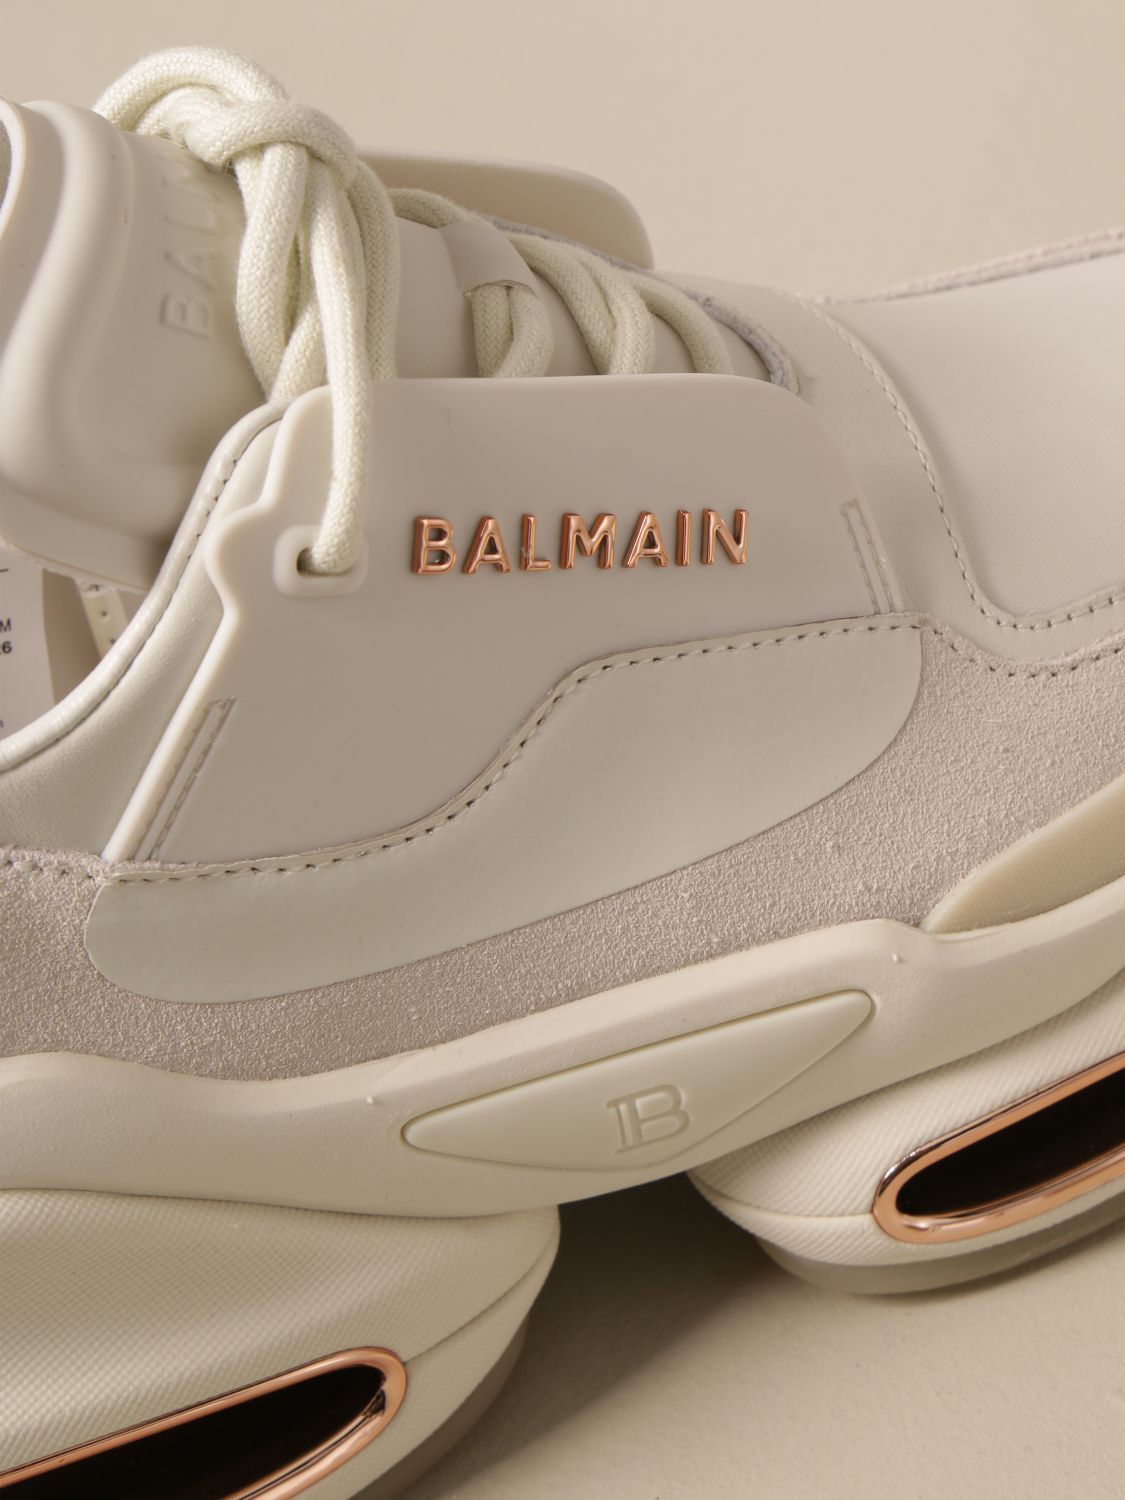 balmain tennis shoes